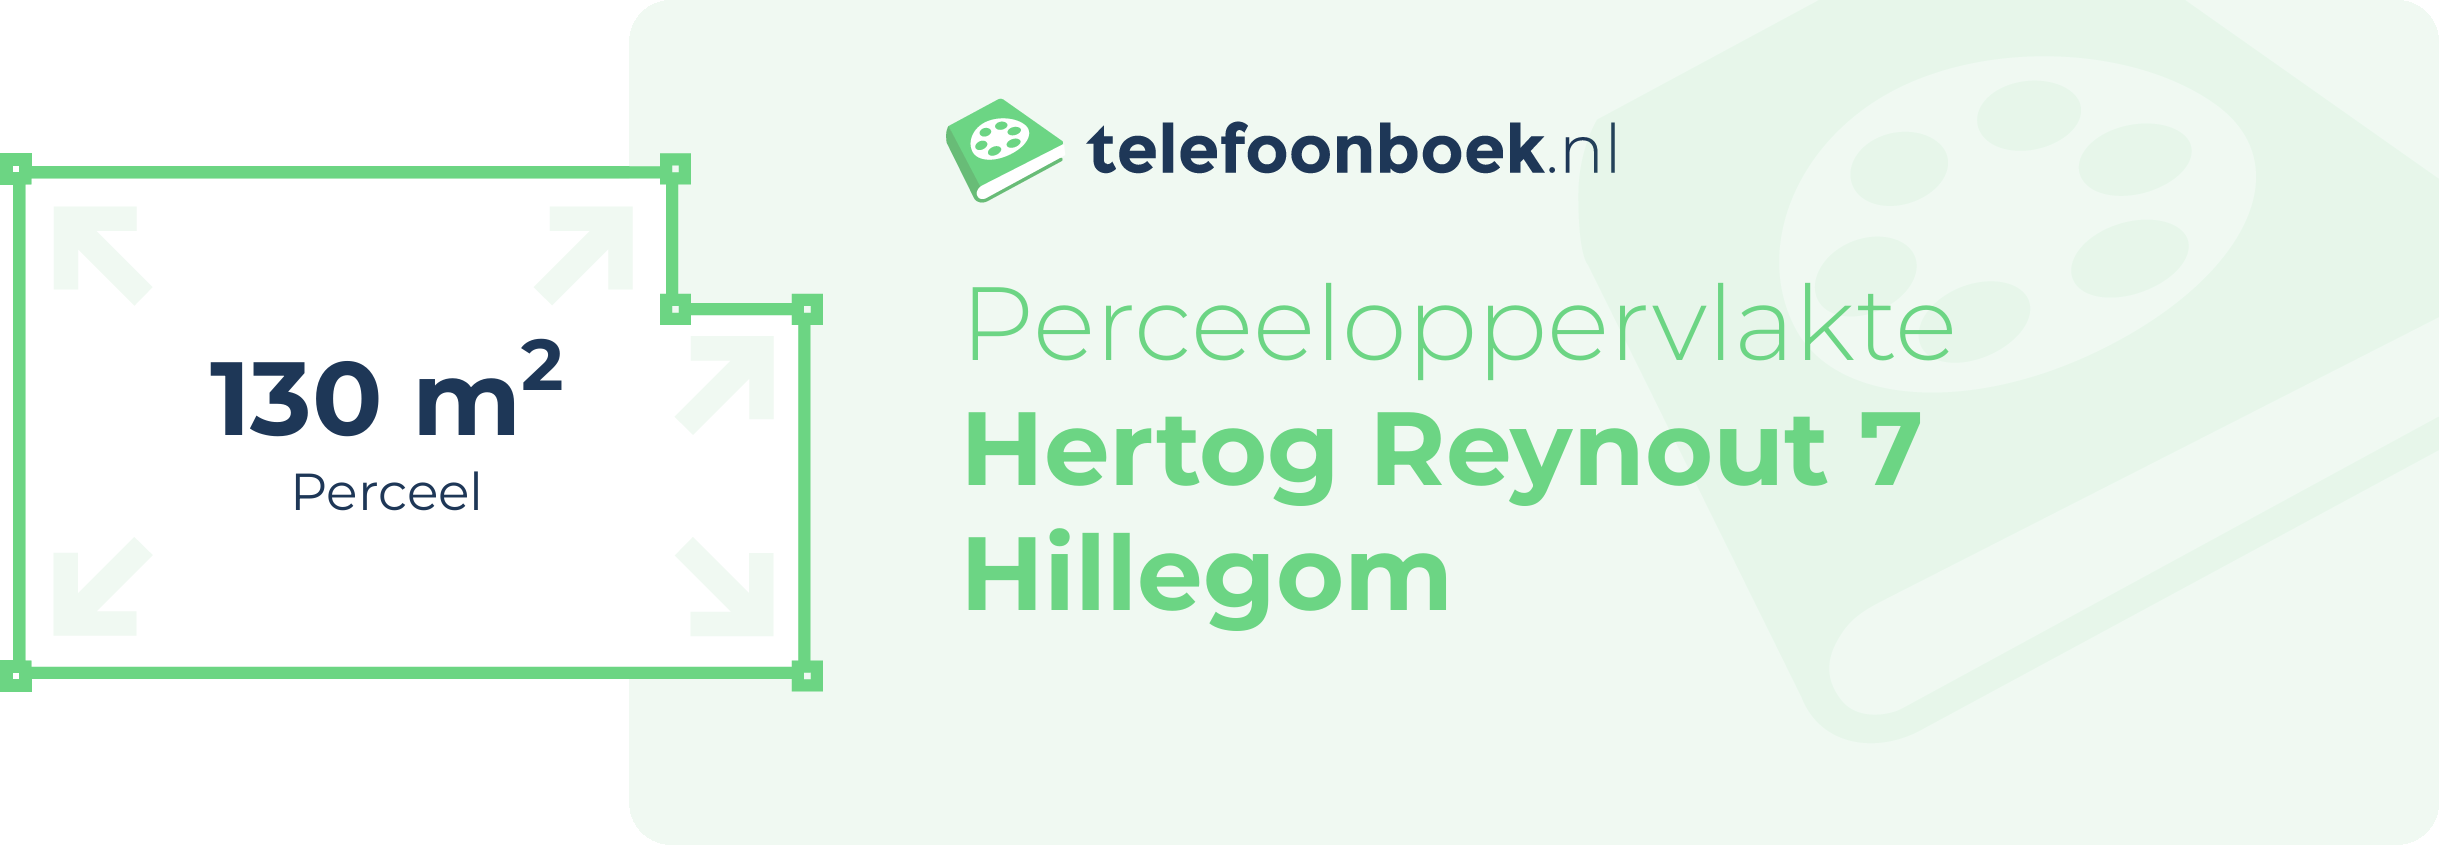 Perceeloppervlakte Hertog Reynout 7 Hillegom